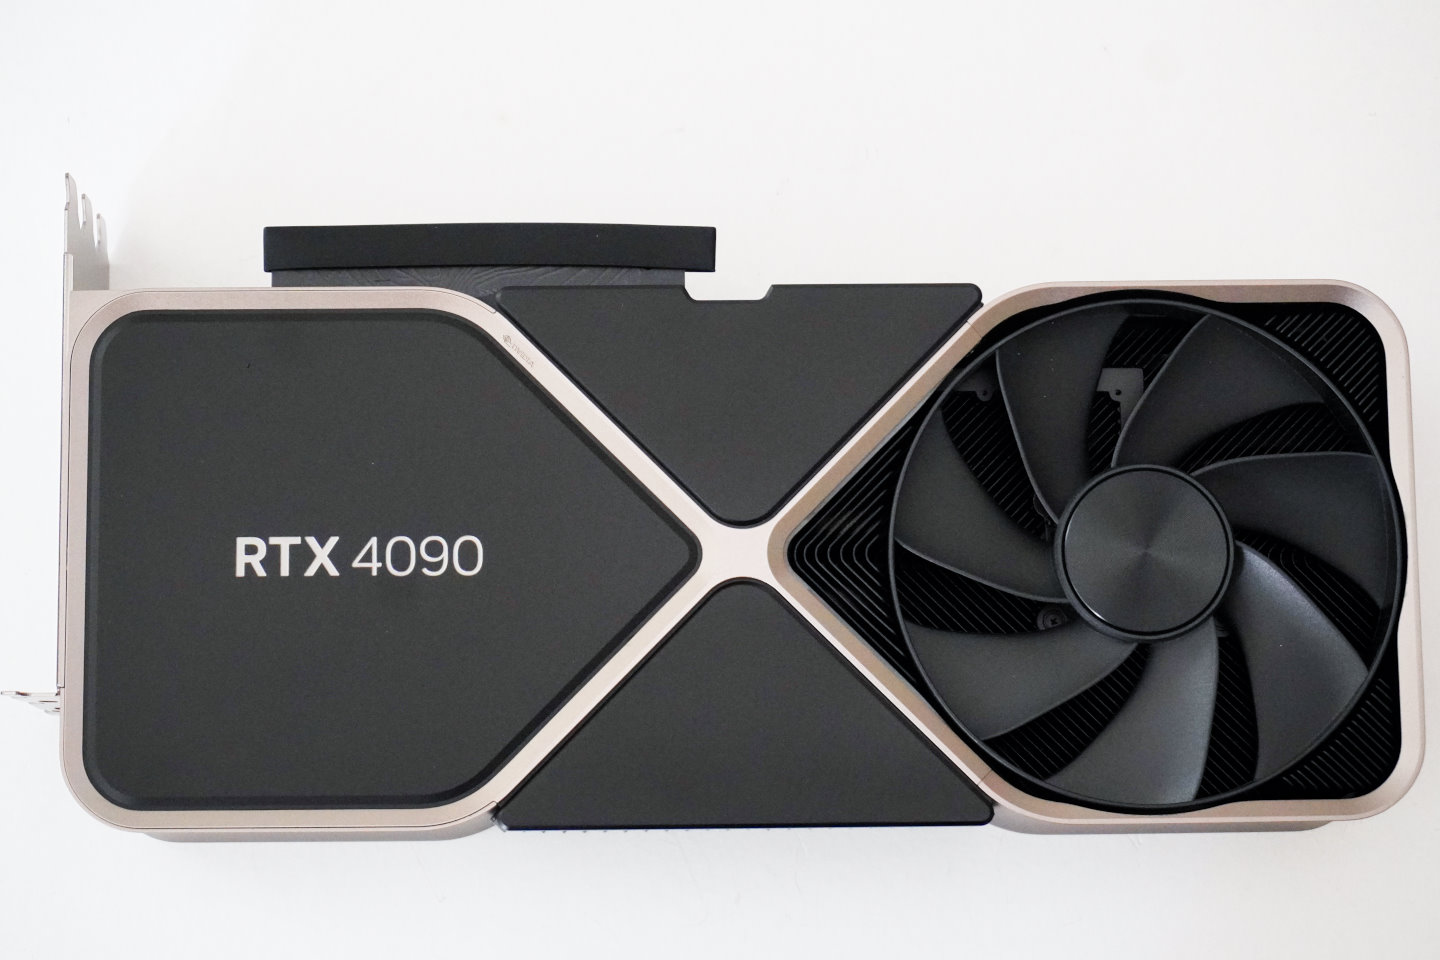 GeForce RTX 4090 Founder Edition的外型與前代GeForce RTX 3090 Ti Founder Edition相當接近，更多圖片可以參考先前的開箱報導。